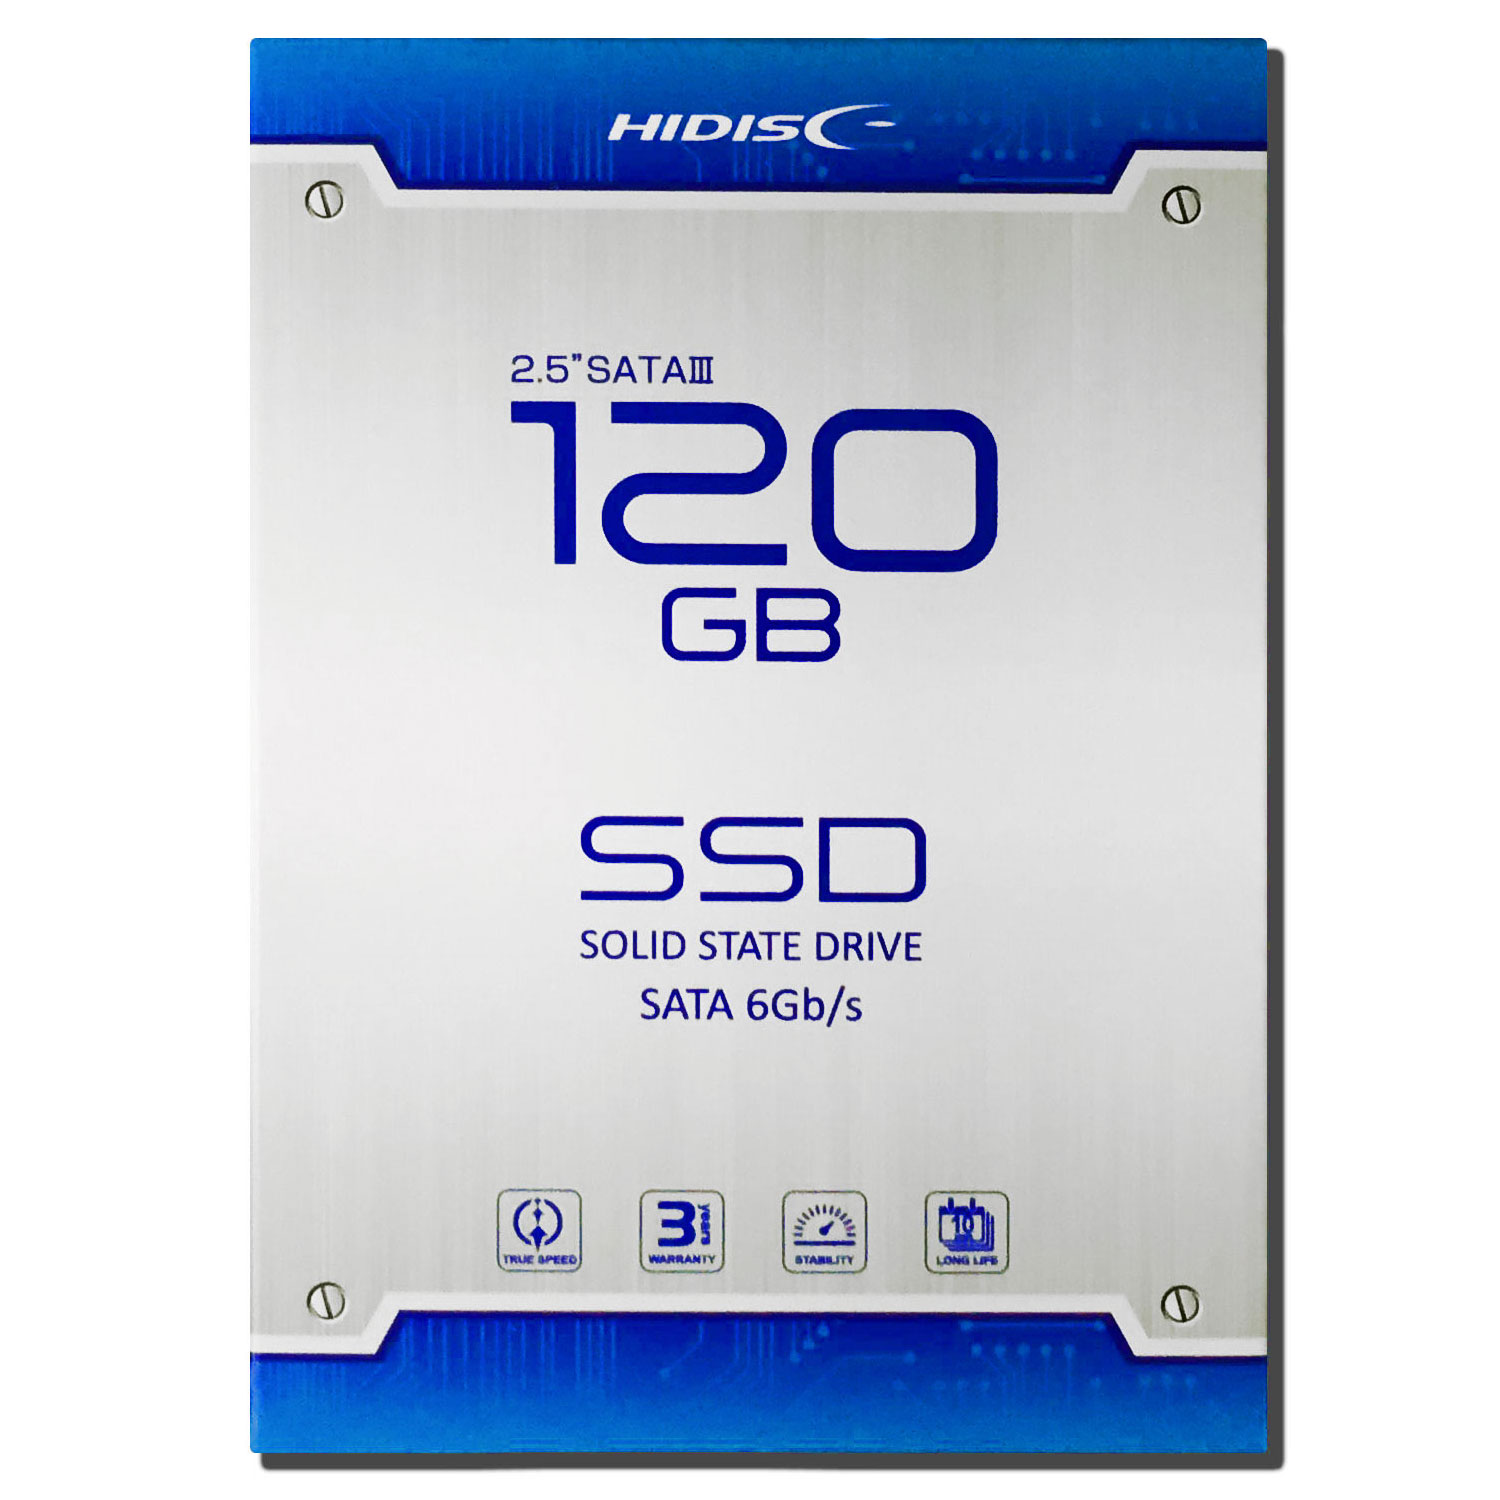 HIDISC 2.5inch SATA SSD 128GB HDSSD128GJP3 | HIDISC 株式会社磁気研究所